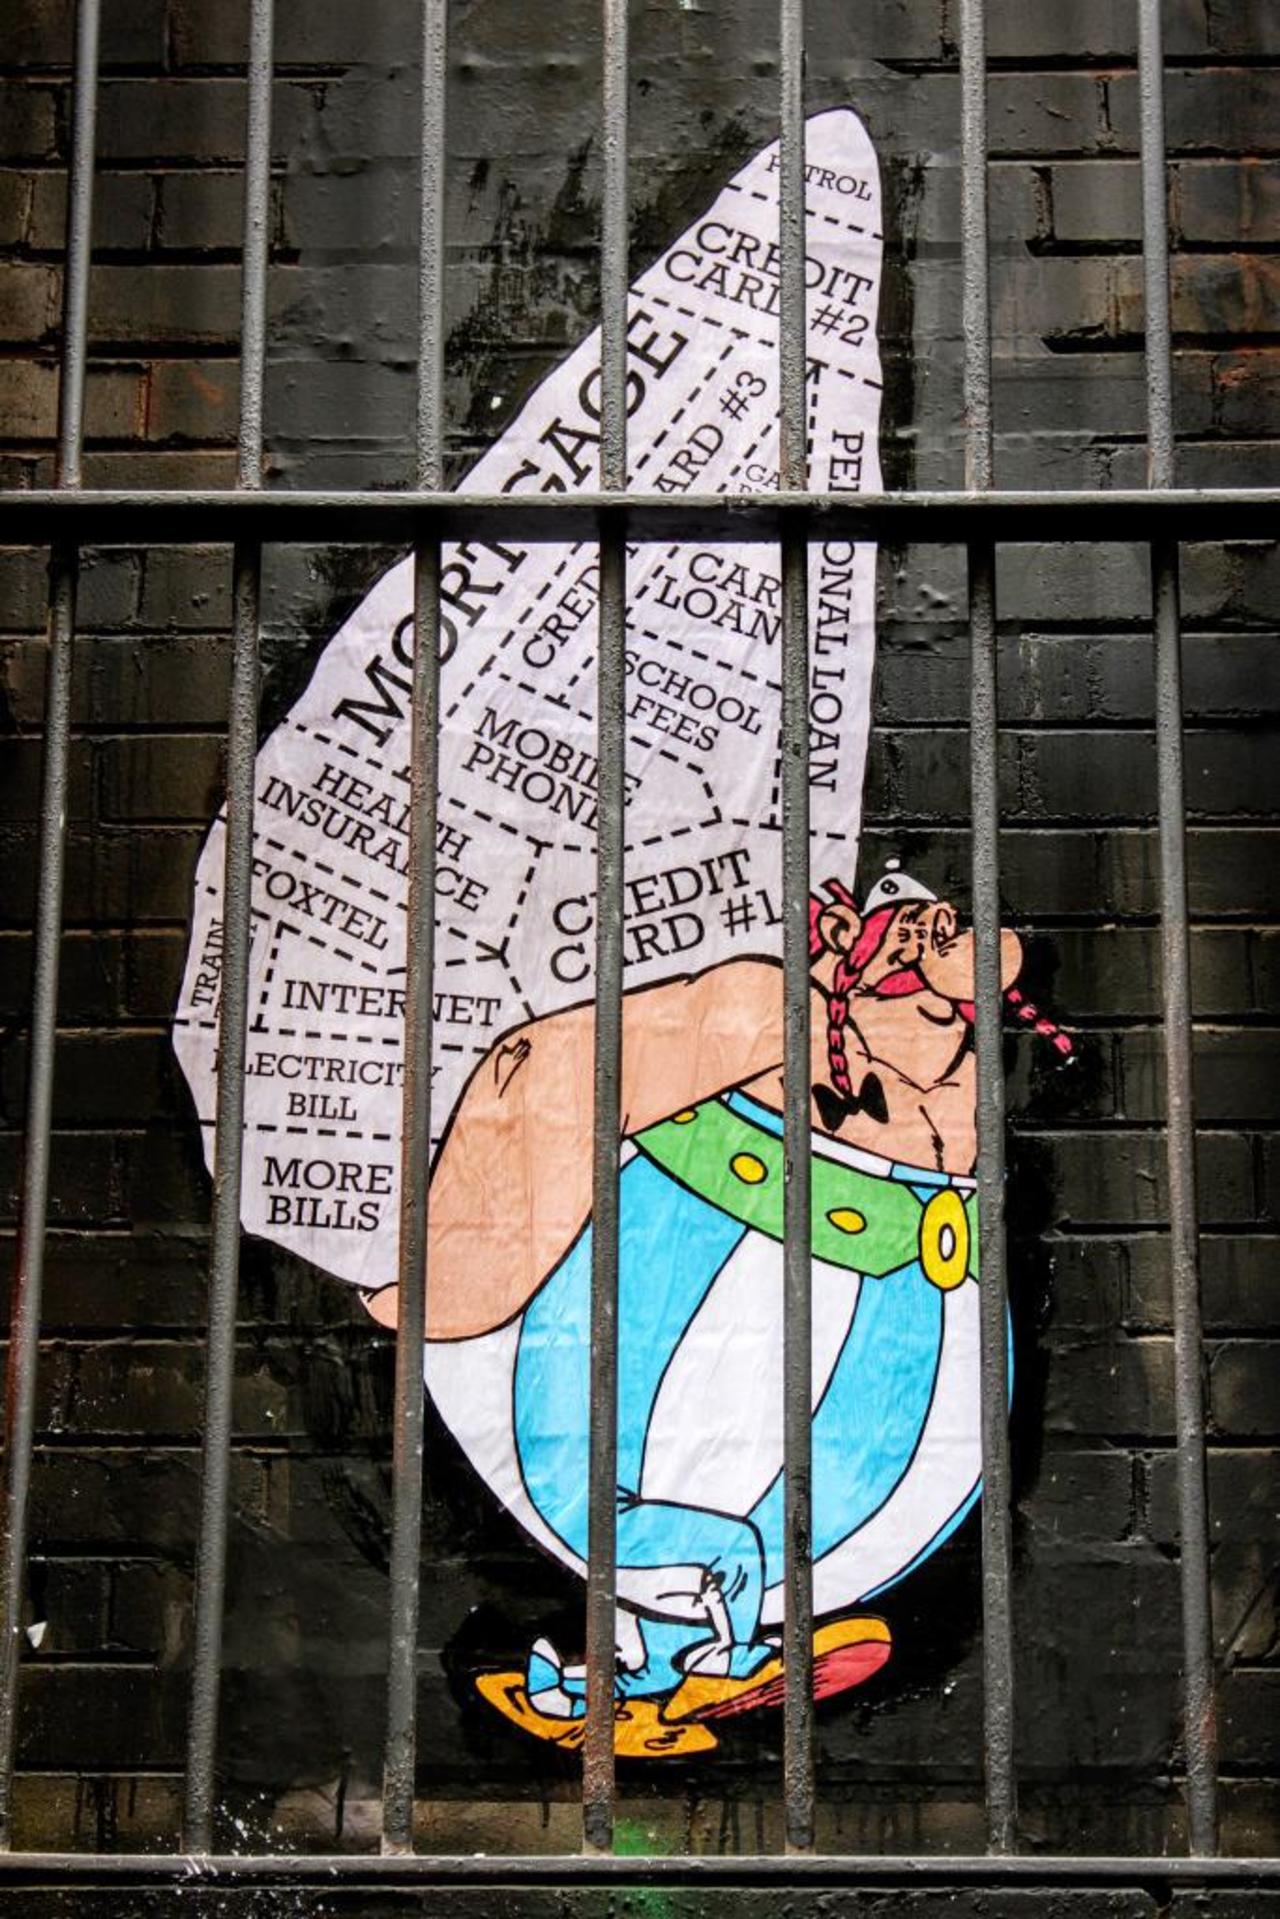 RT GuilleMGreco: Modern Life...free.
#Art #Graffiti #StreetArt #UrbanArt
Obelix. https://t.co/4BGQLvt0jD https://goo.gl/t4fpx2